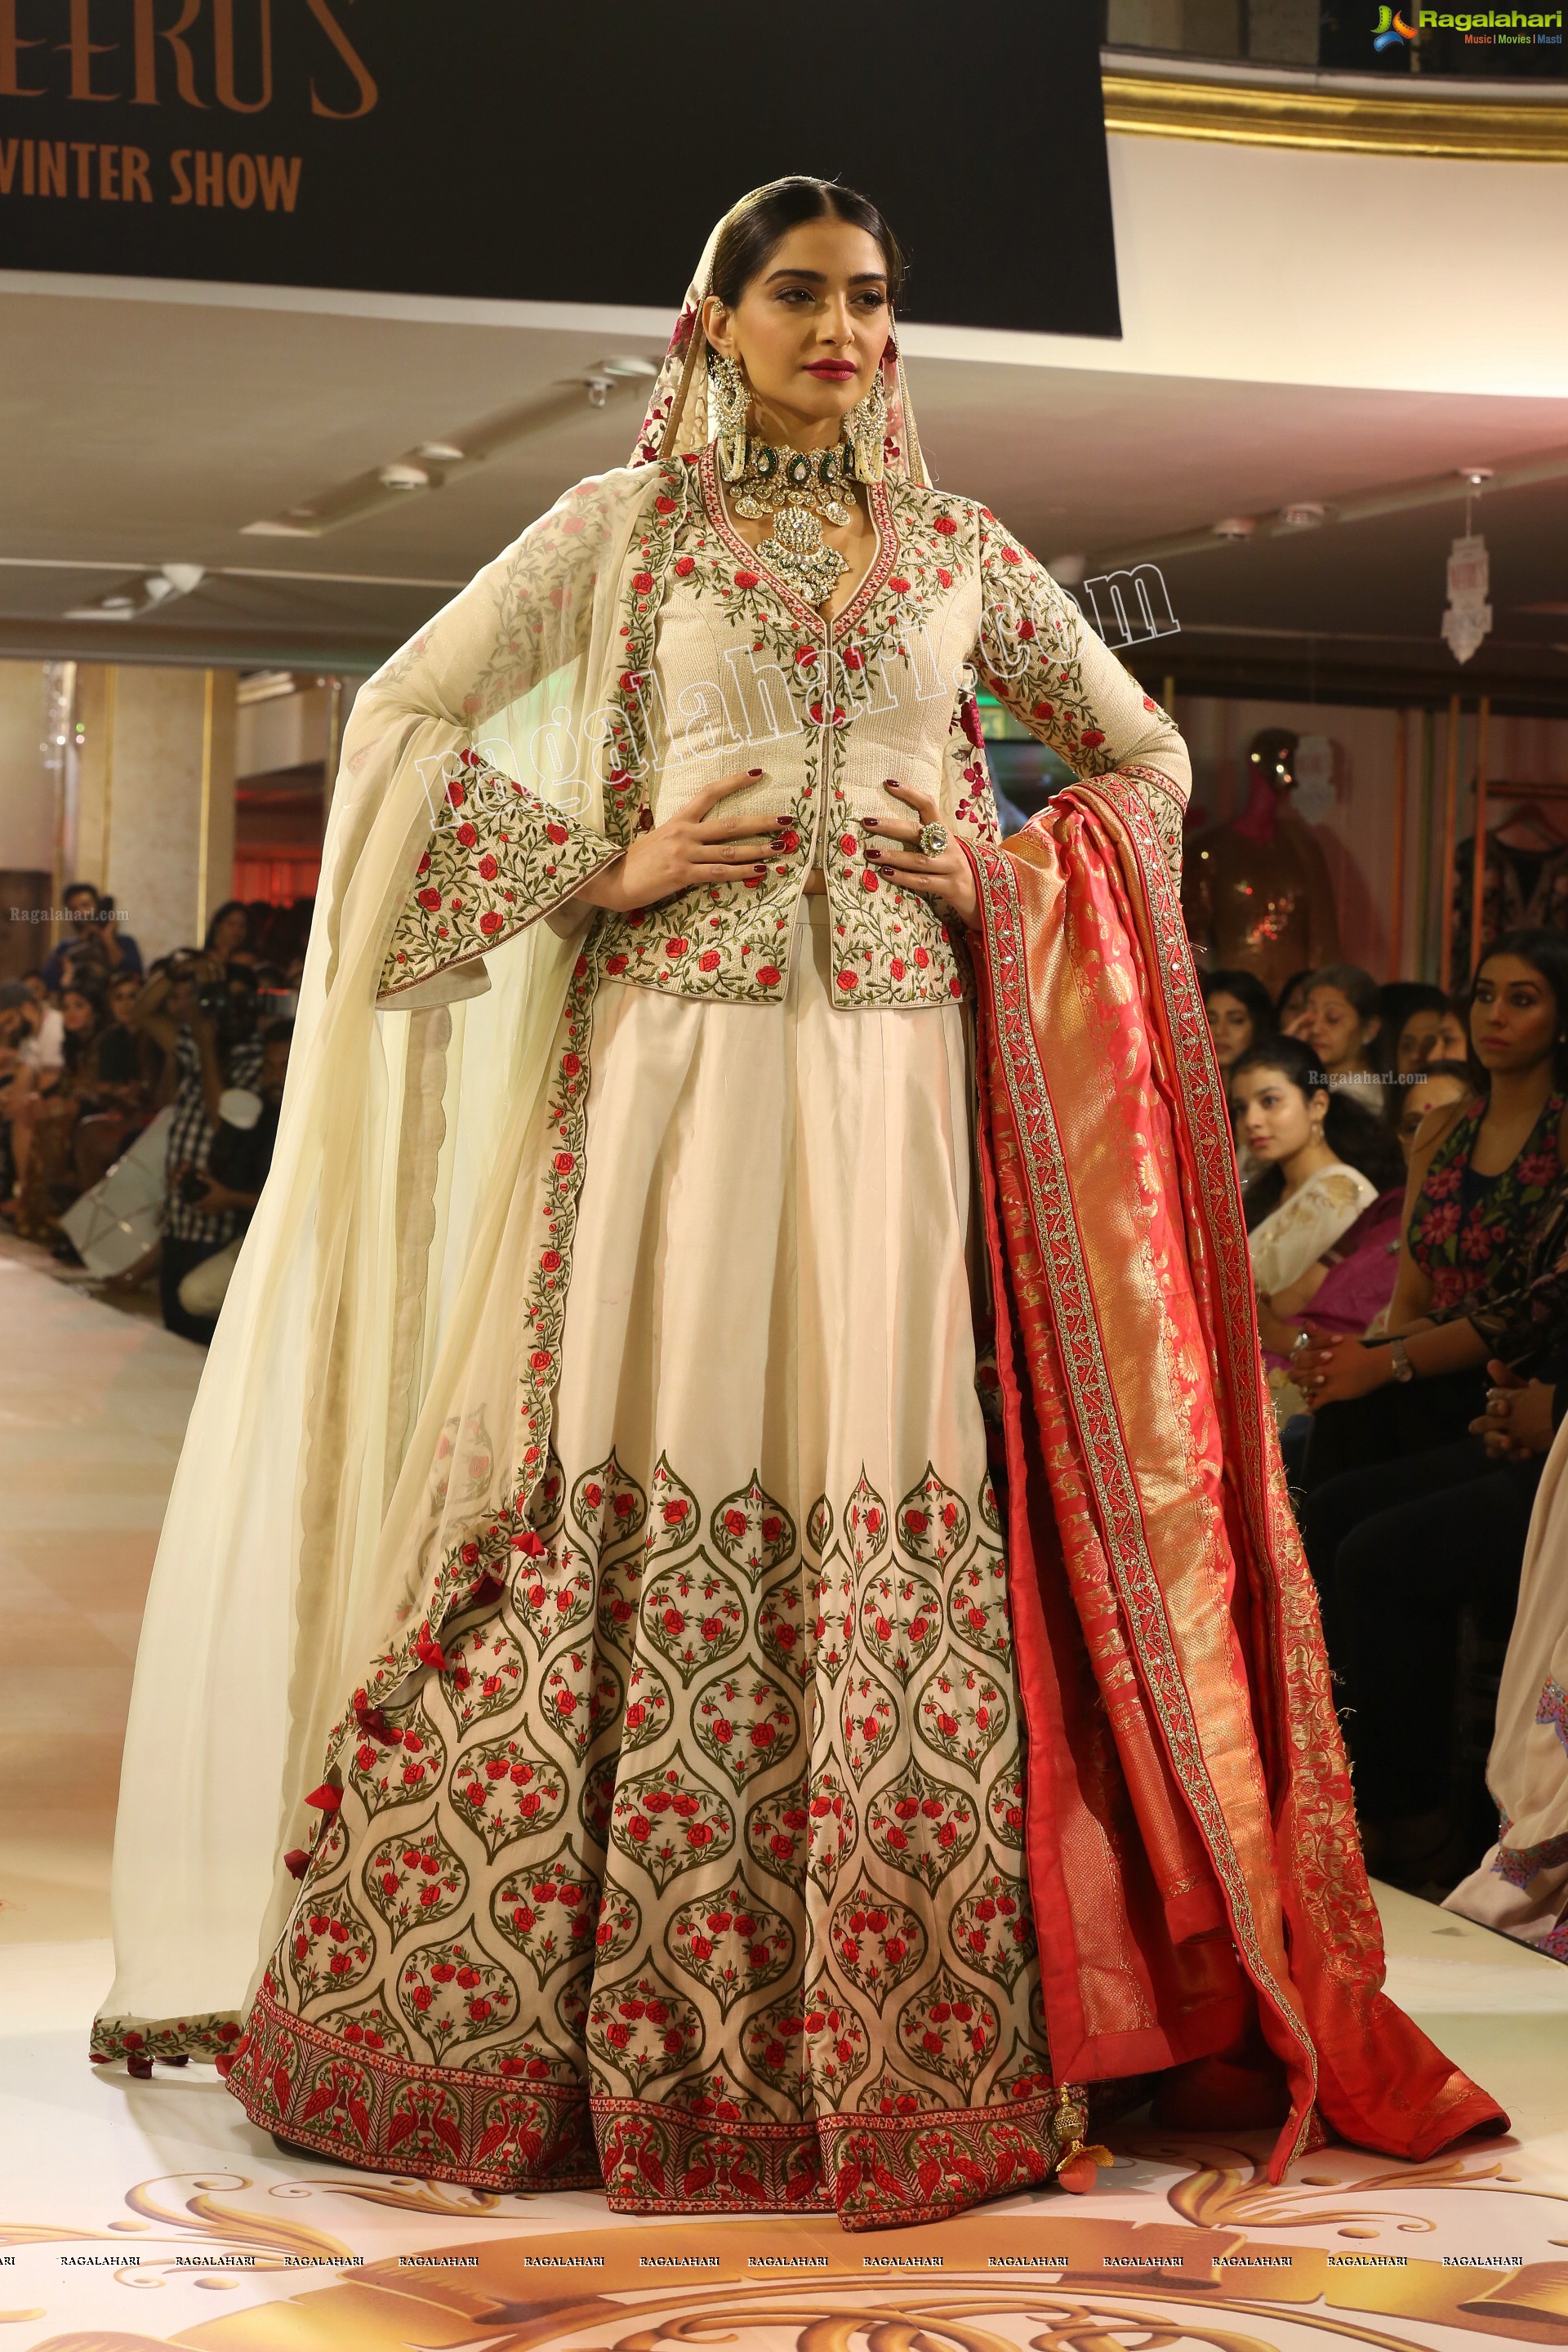 Sonam Kapoor at Neeru's The Winter Fashion Show - HD Gallery